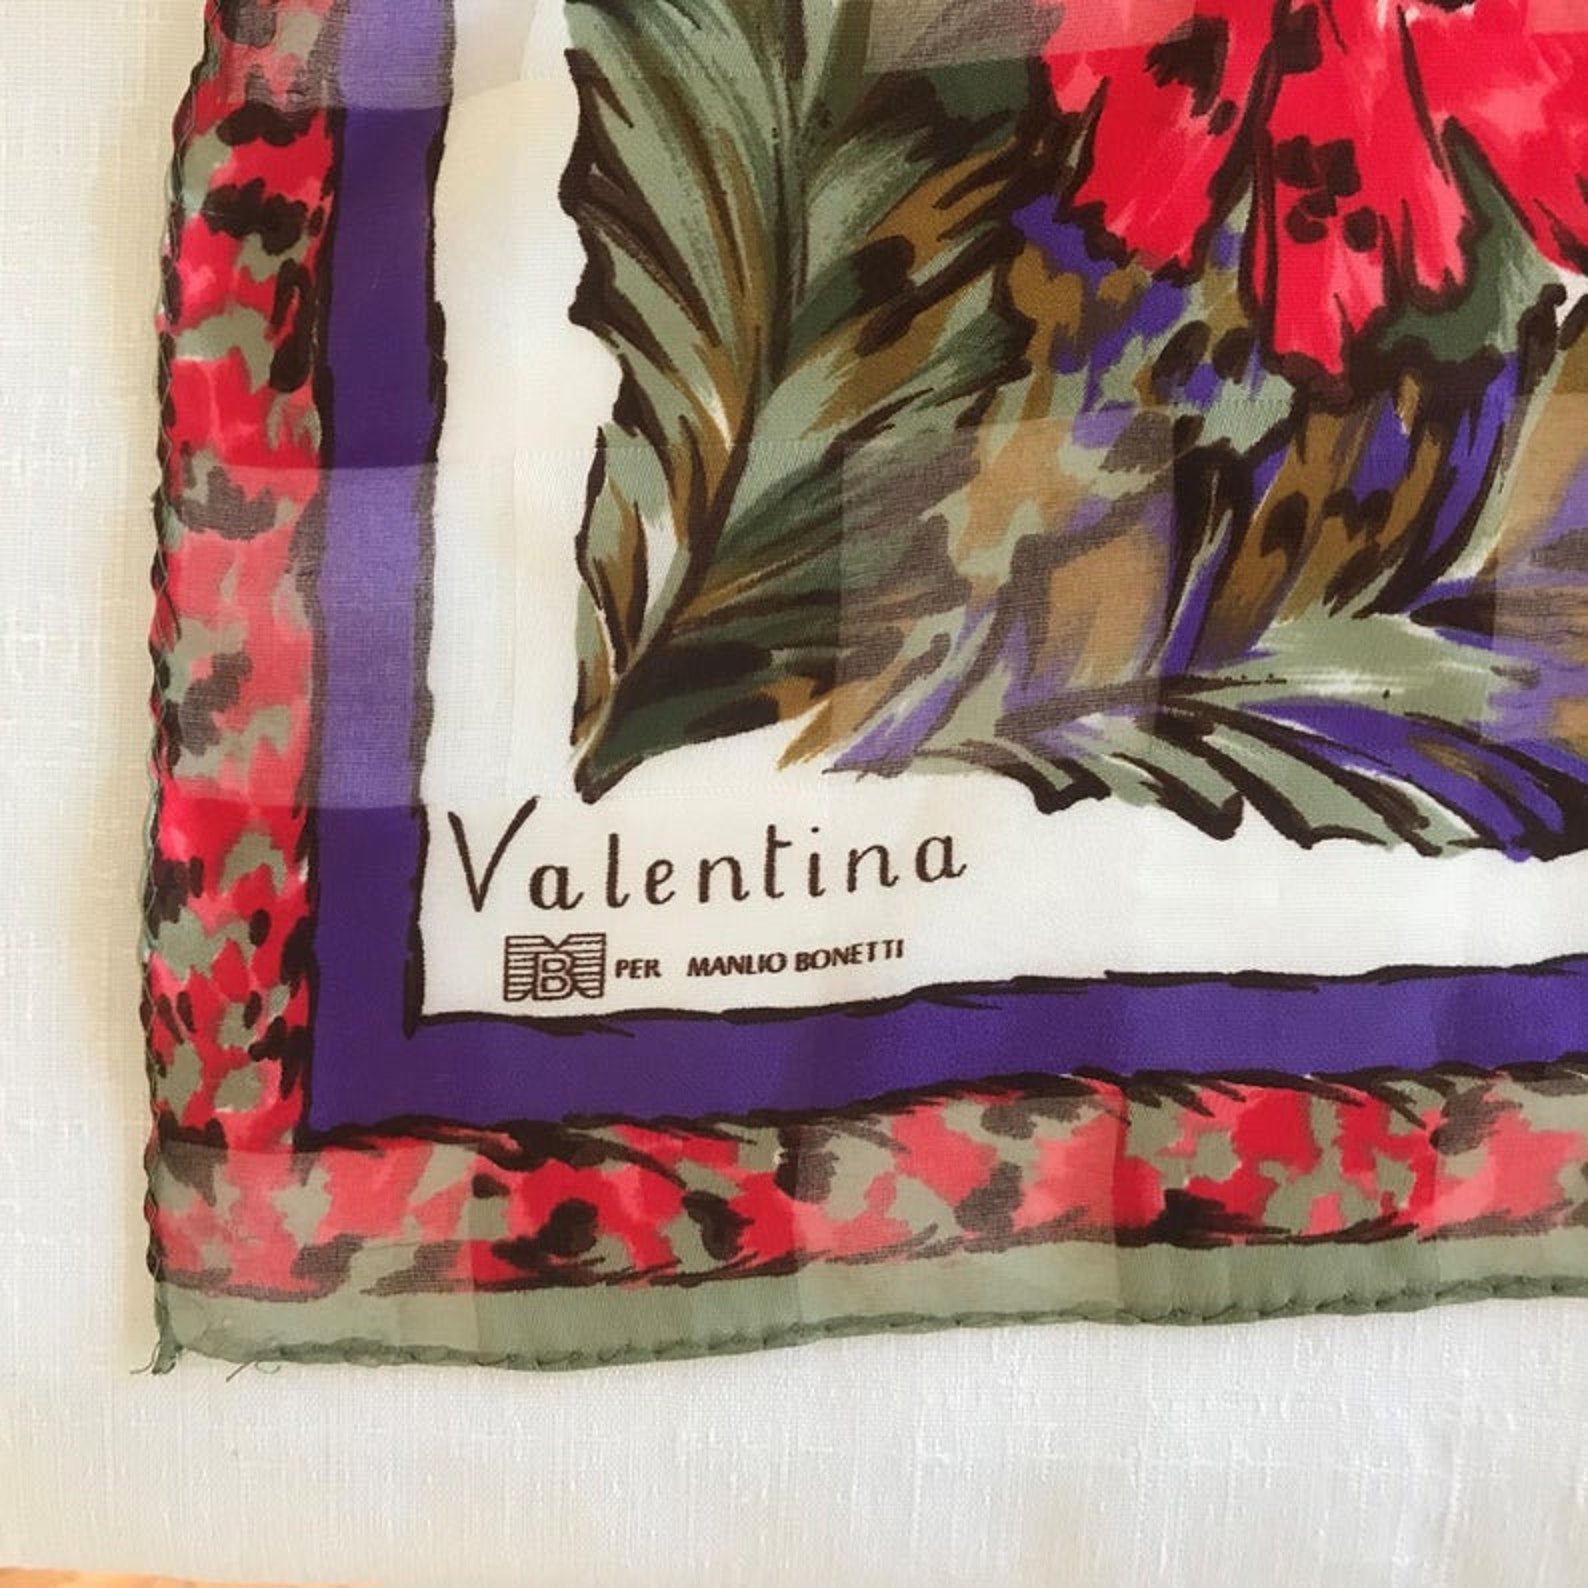 Valentina per Manlio Bonetti/ Designer Polyester Floral Scarf - Etsy